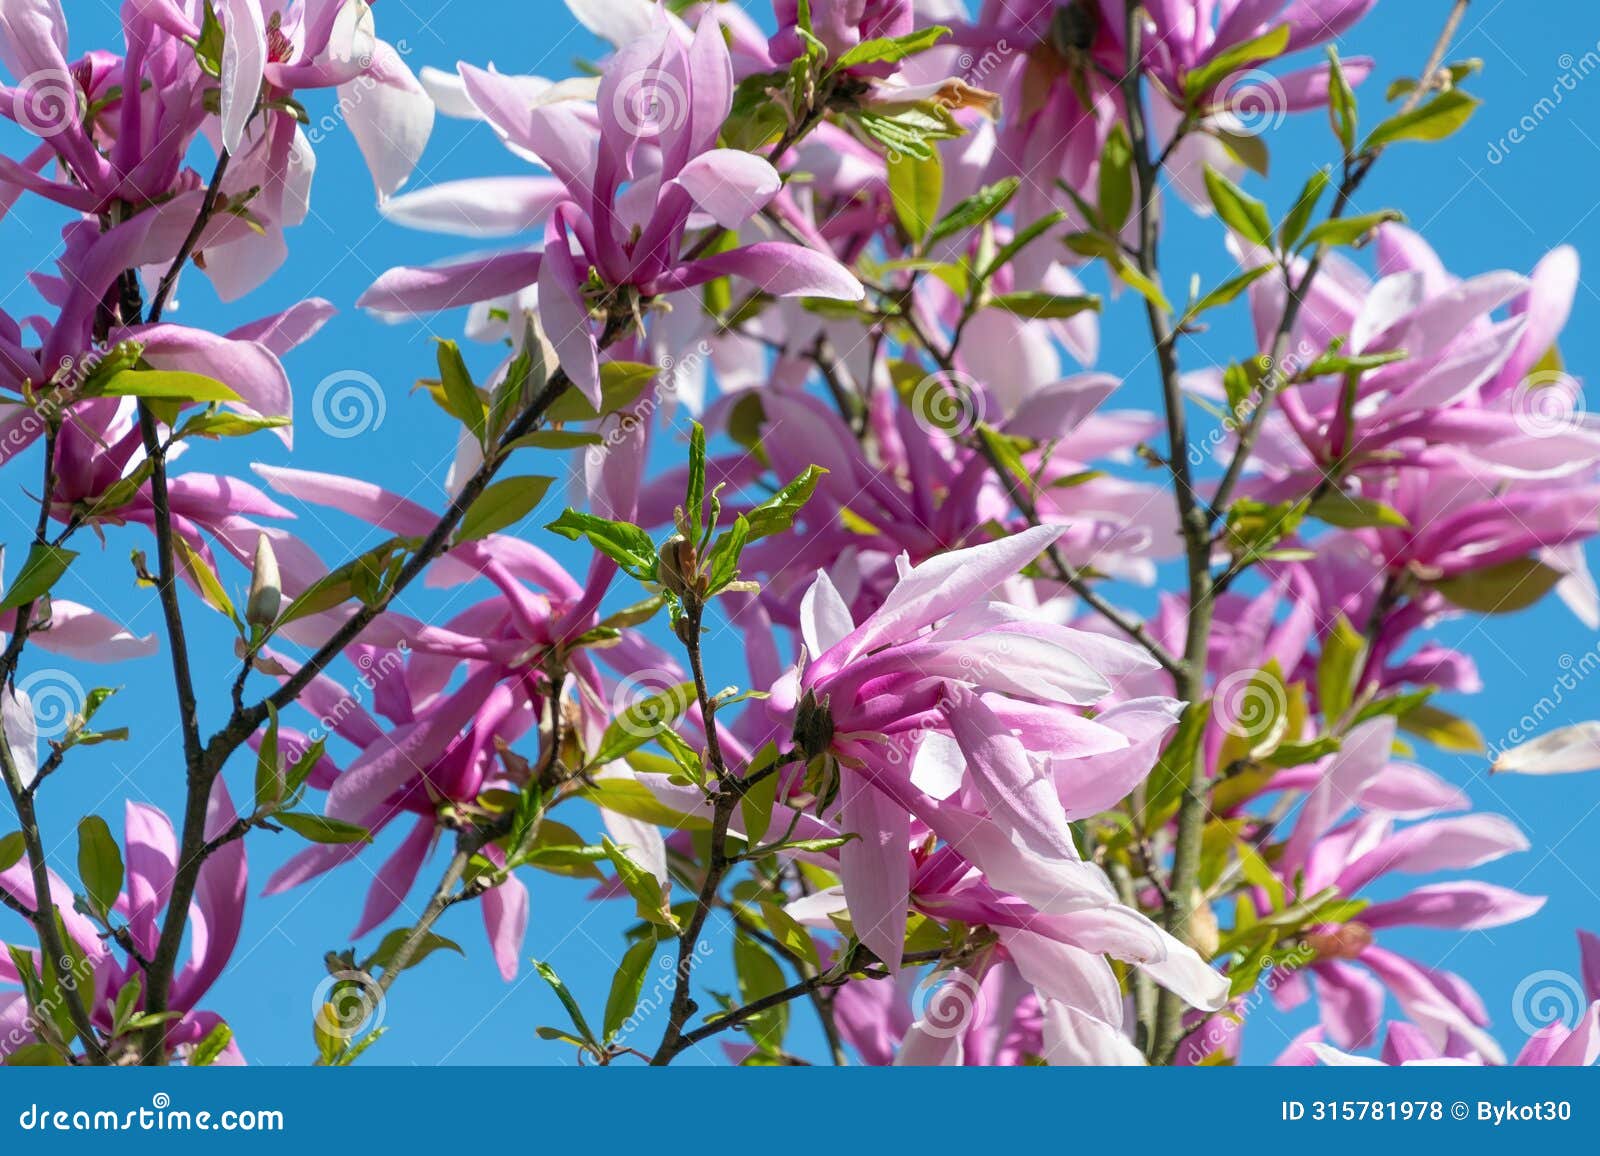 beautiful pink flowers of magnolia liliiflora